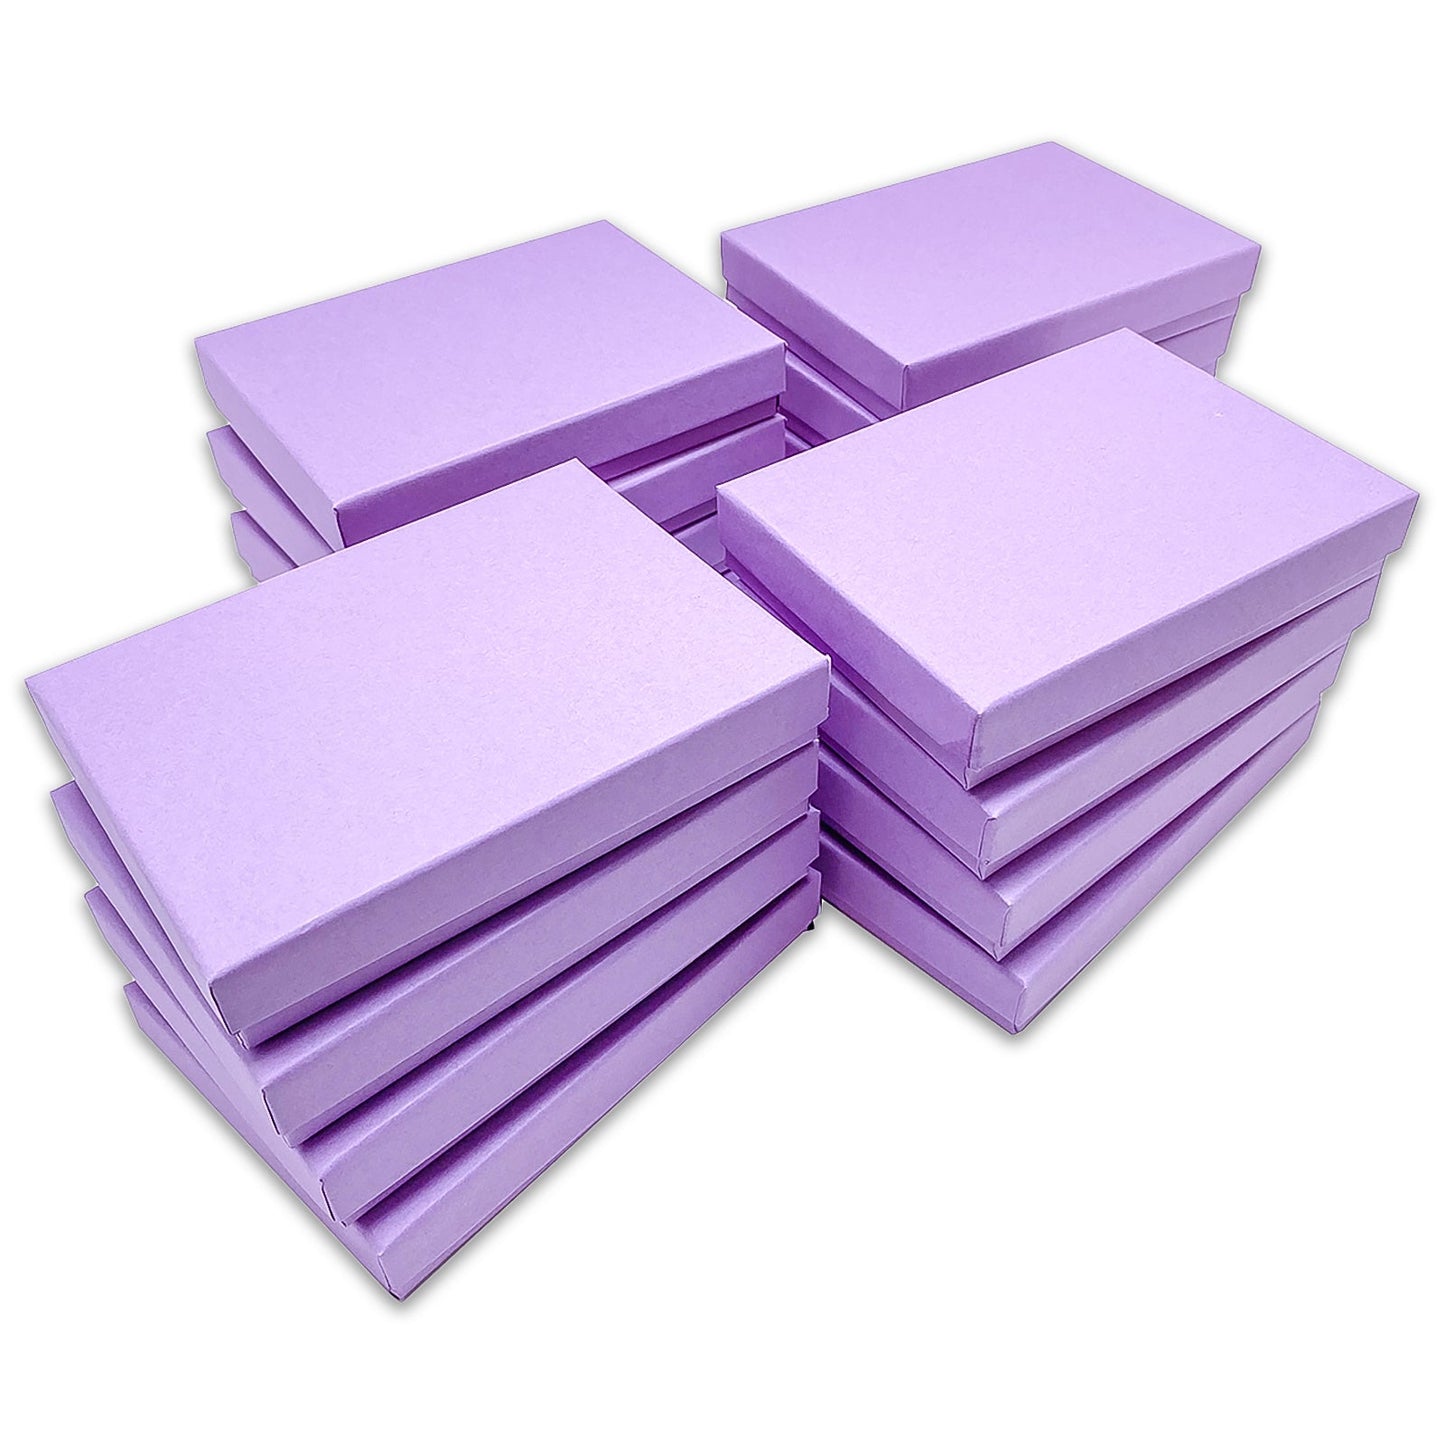 #53 - 5 7/16" x 3 15/16" x 1" Matte Purple Cotton Filled Paper Box